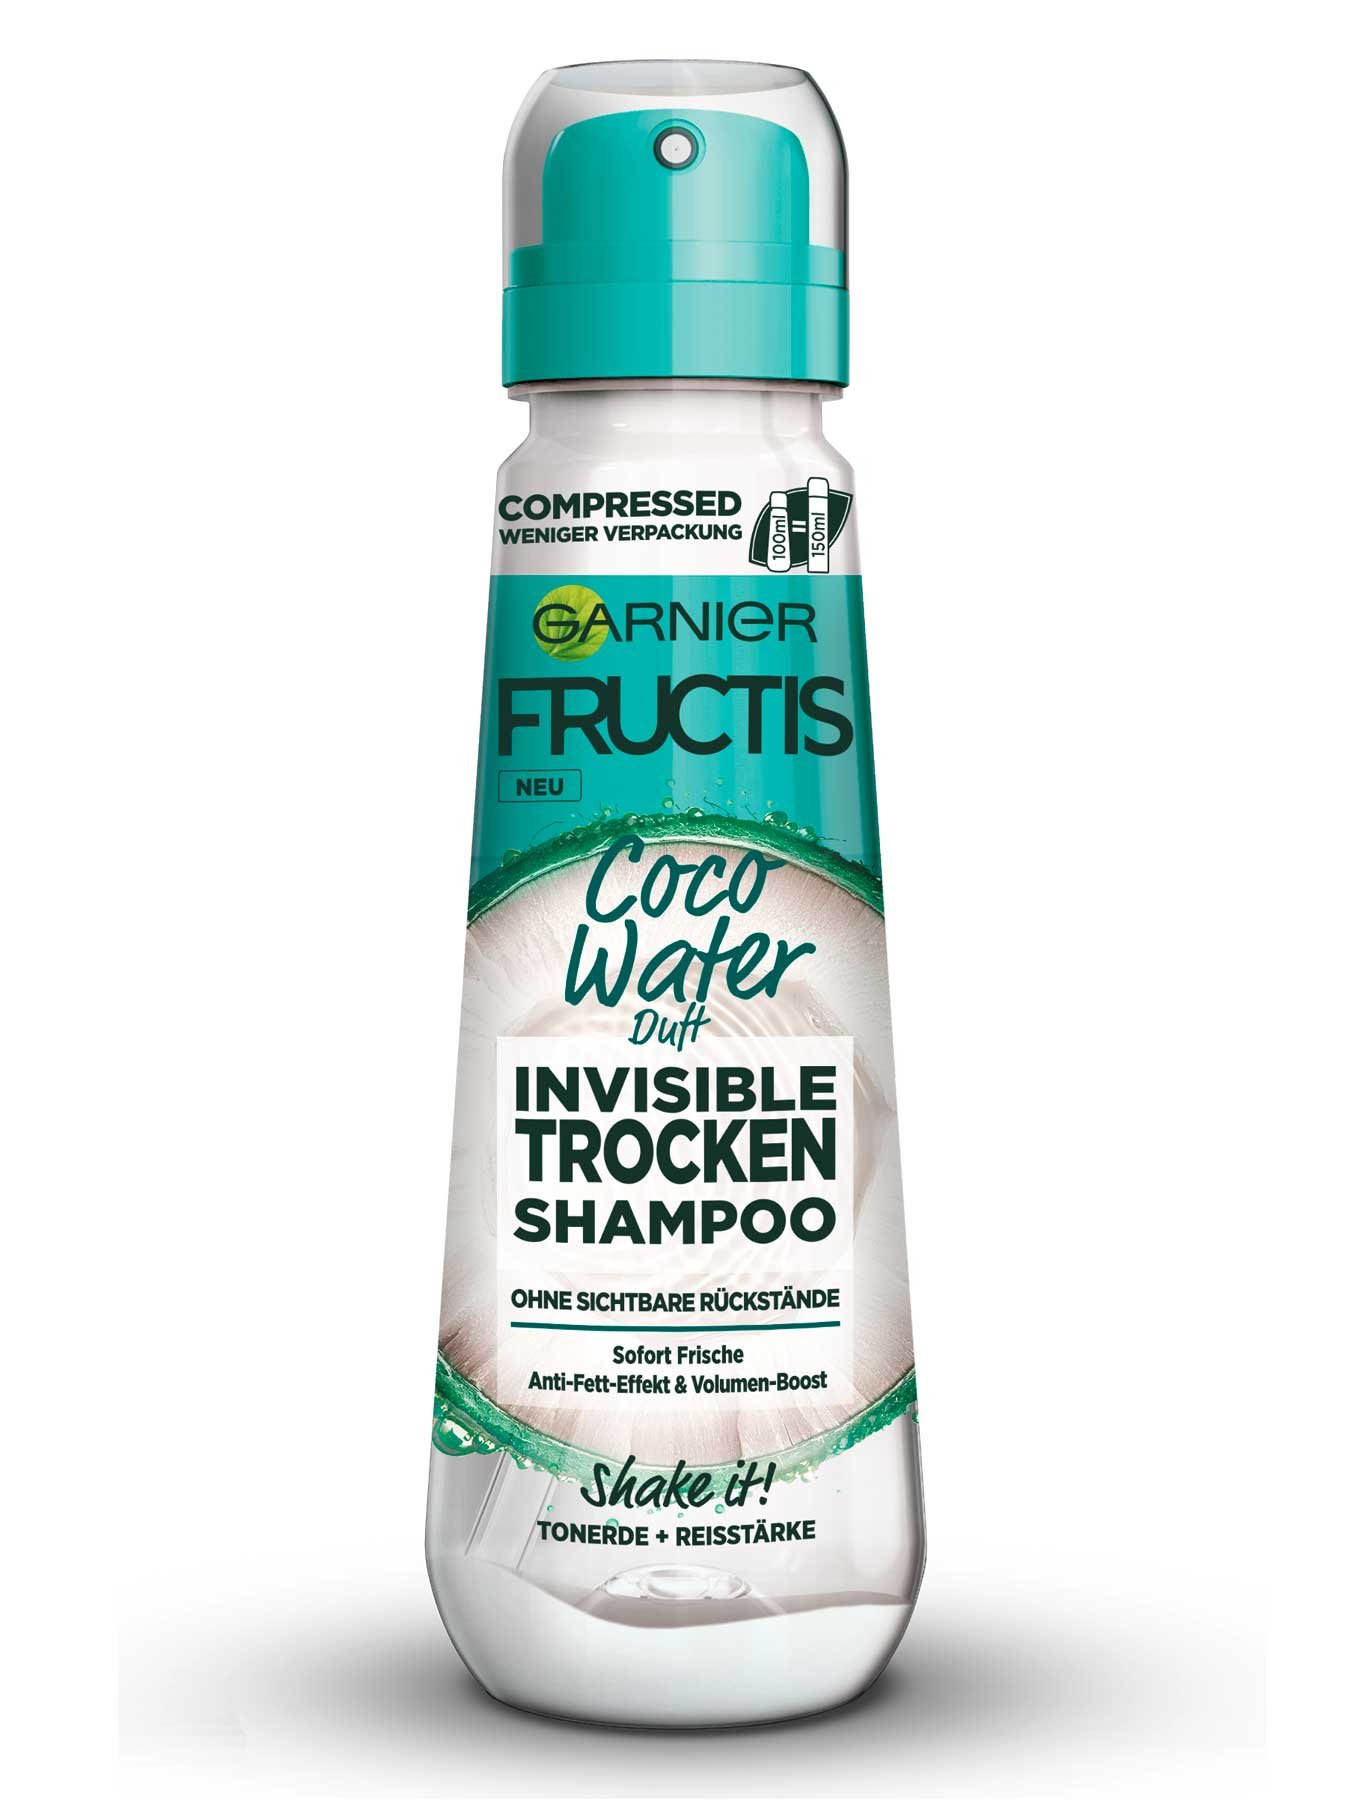 Fructis Invisible Trockenshampoo Coco Water - Produktansicht